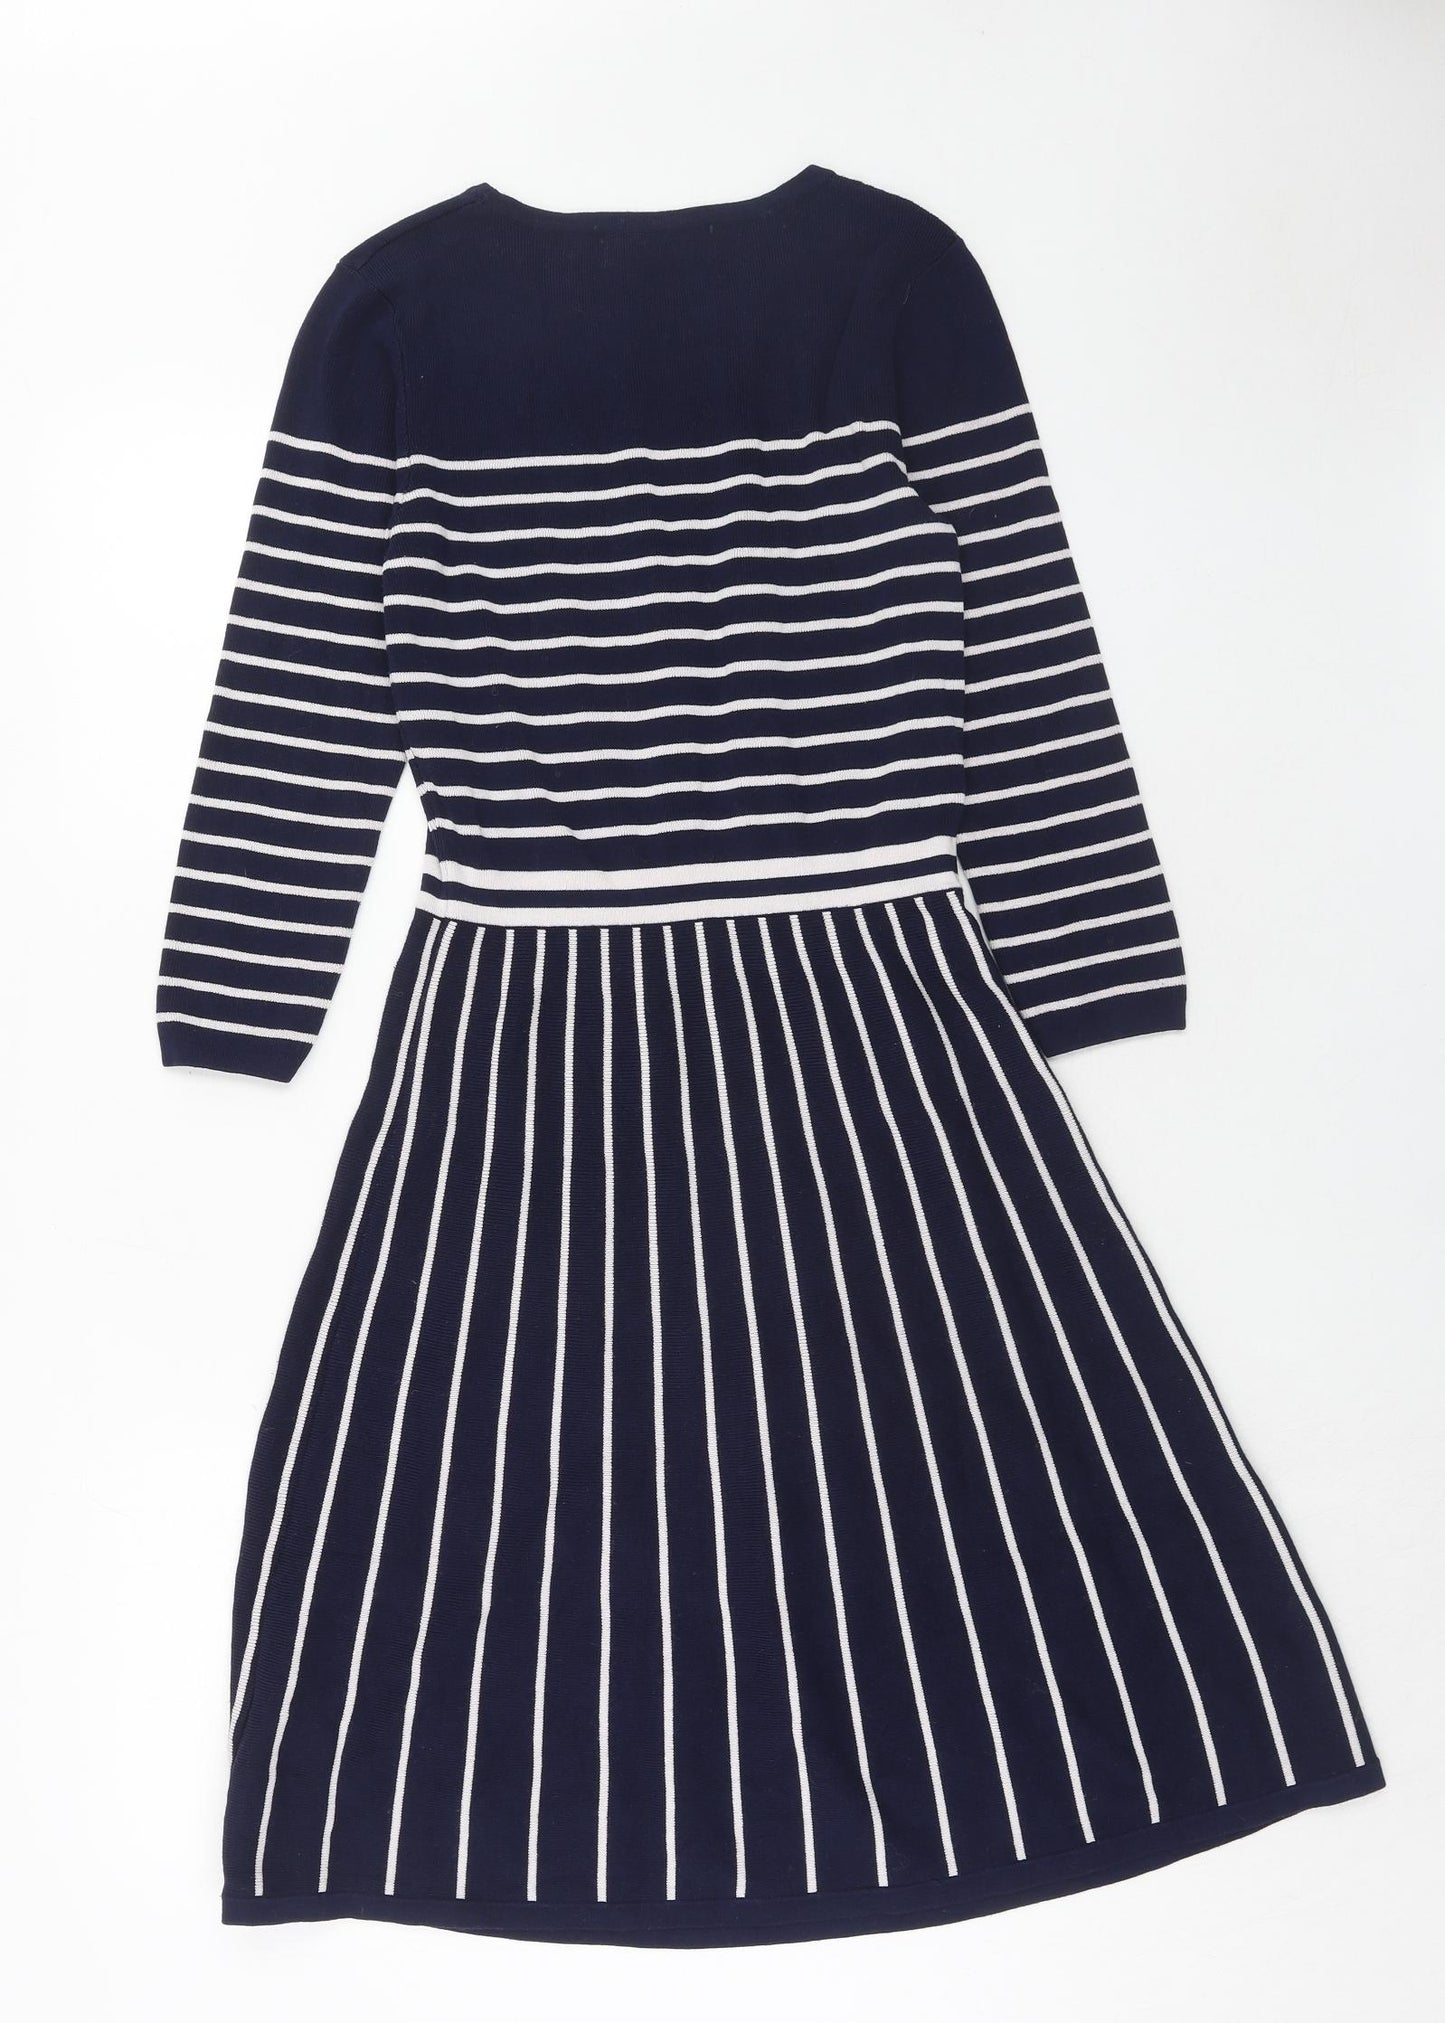 Paul Costelloe Womens Blue Striped Viscose Jumper Dress Size 10 Boat Neck Pullover